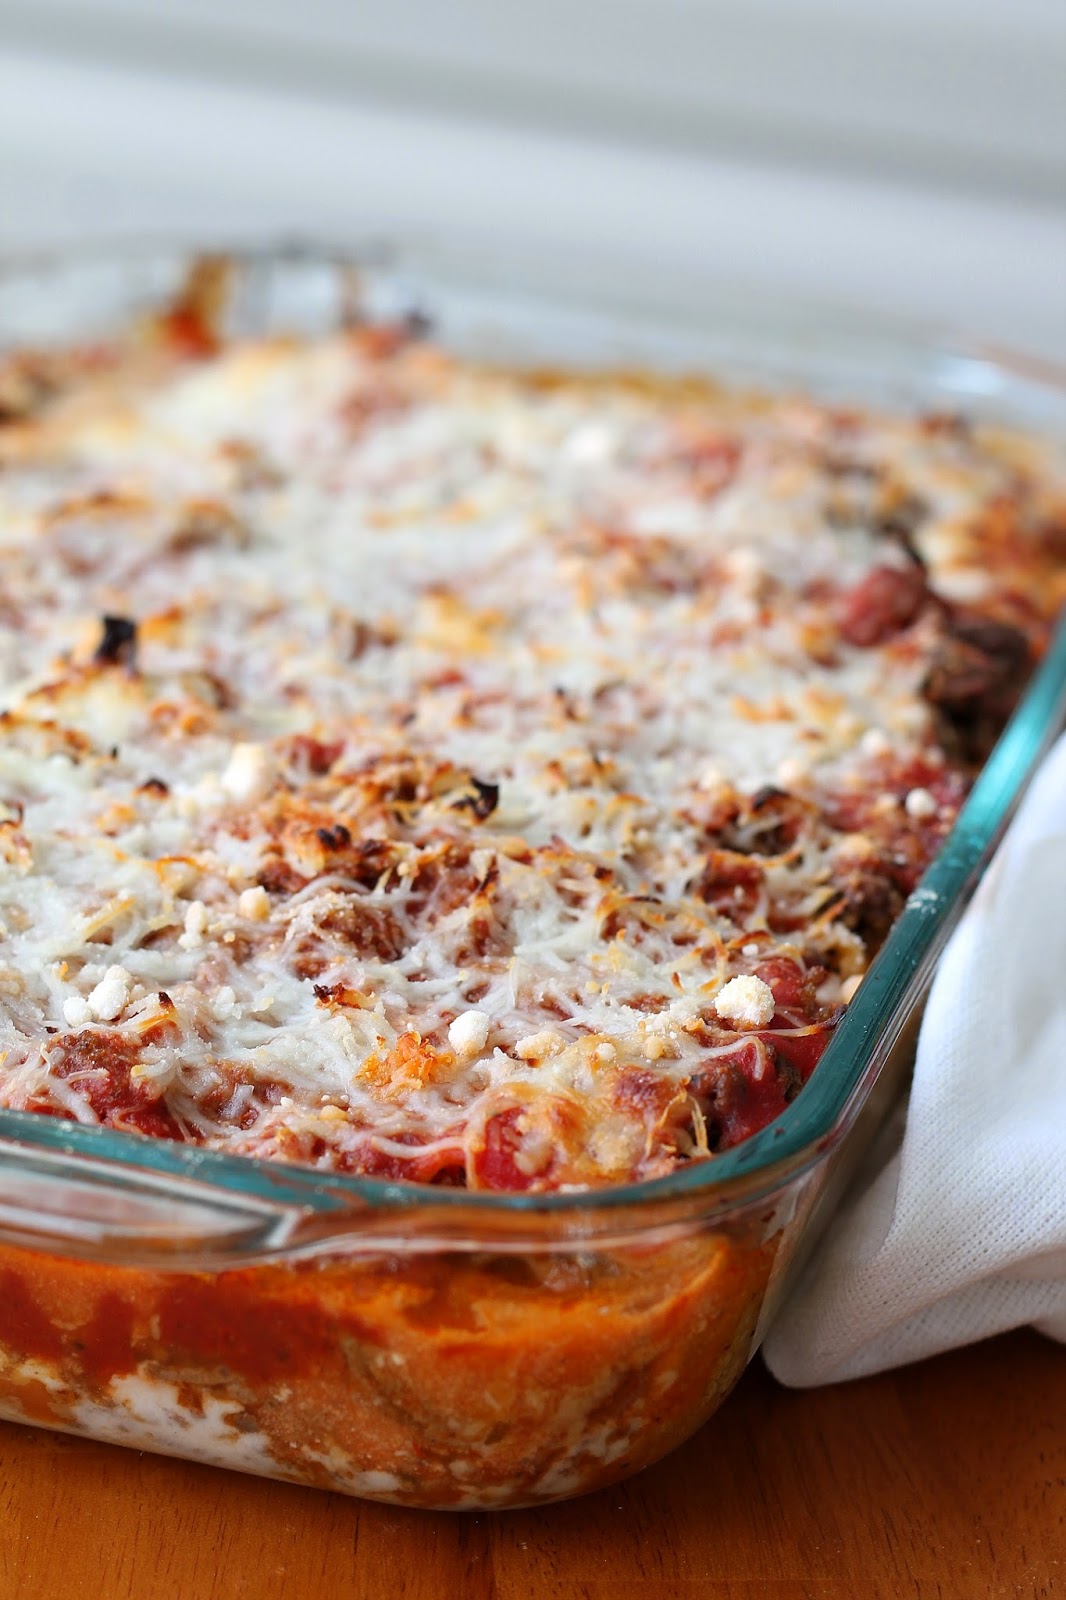 My Grandmother's Recipes - Lasagna Rolls via @labride